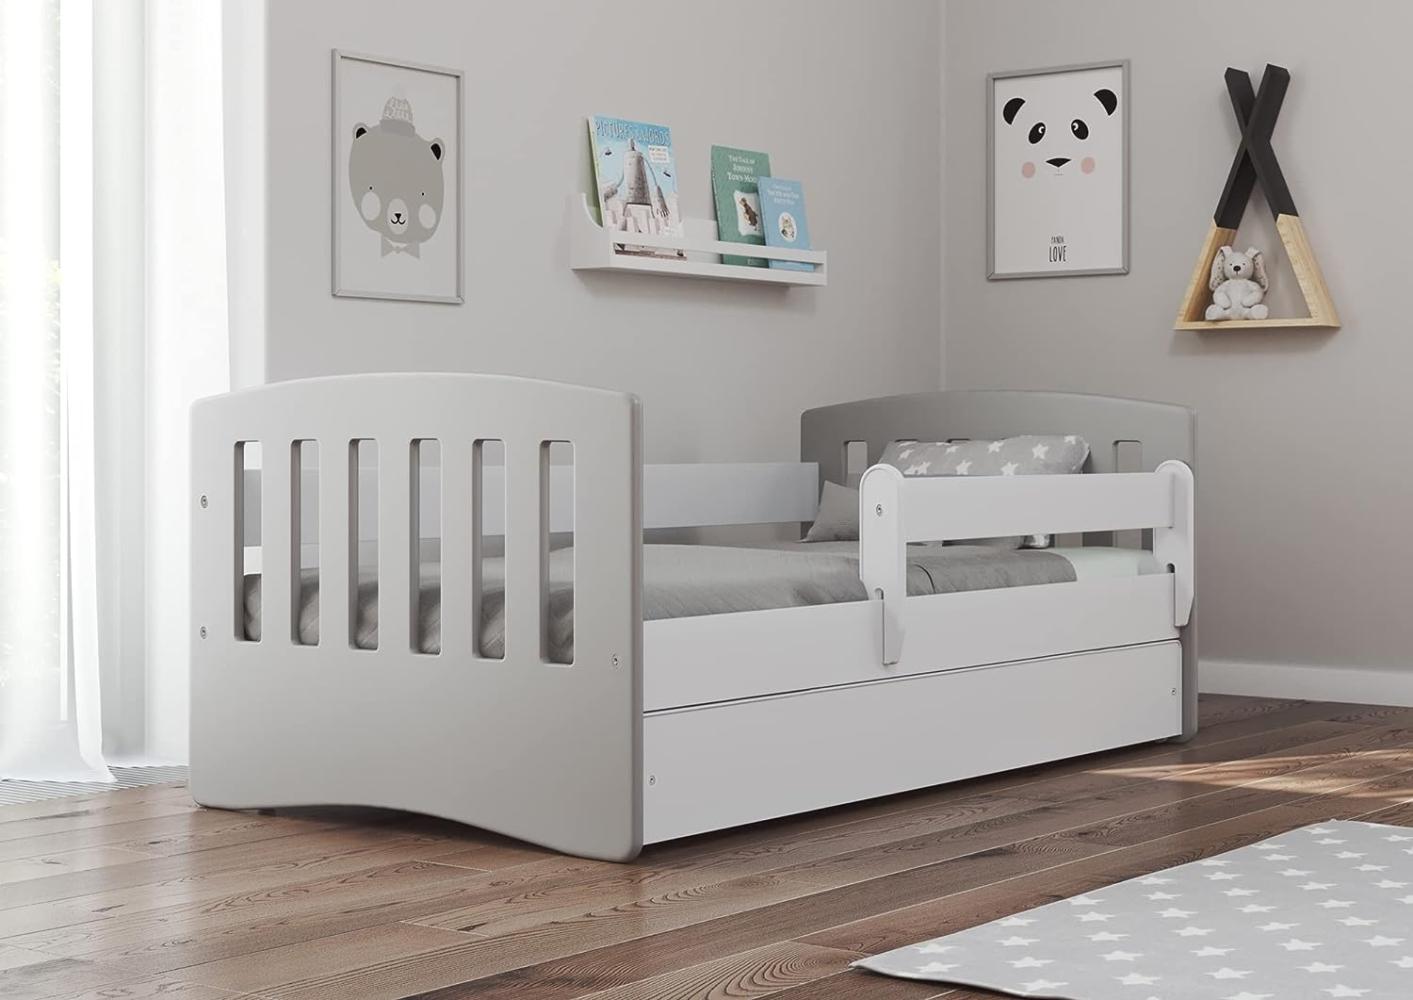 Bjird 'Classic' Kinderbett 80 x 160 cm, Grau, inkl. Rausfallschutz, Lattenrost und Bettschublade Bild 1